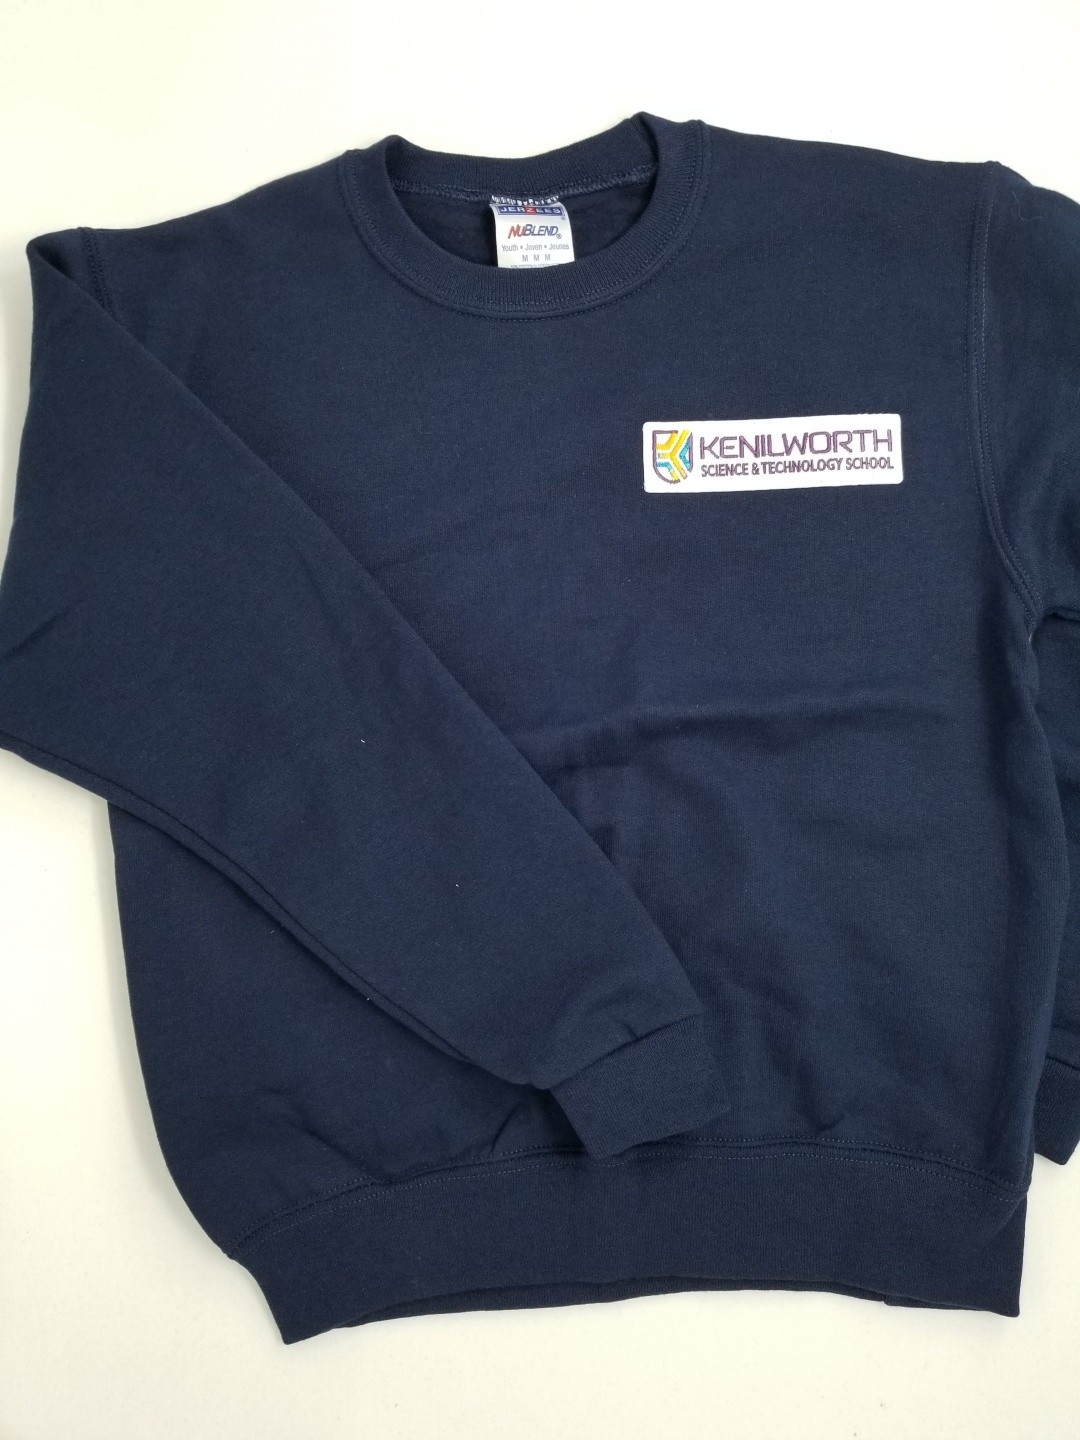 Sweatshirt for Kenilworth STEM-Navy